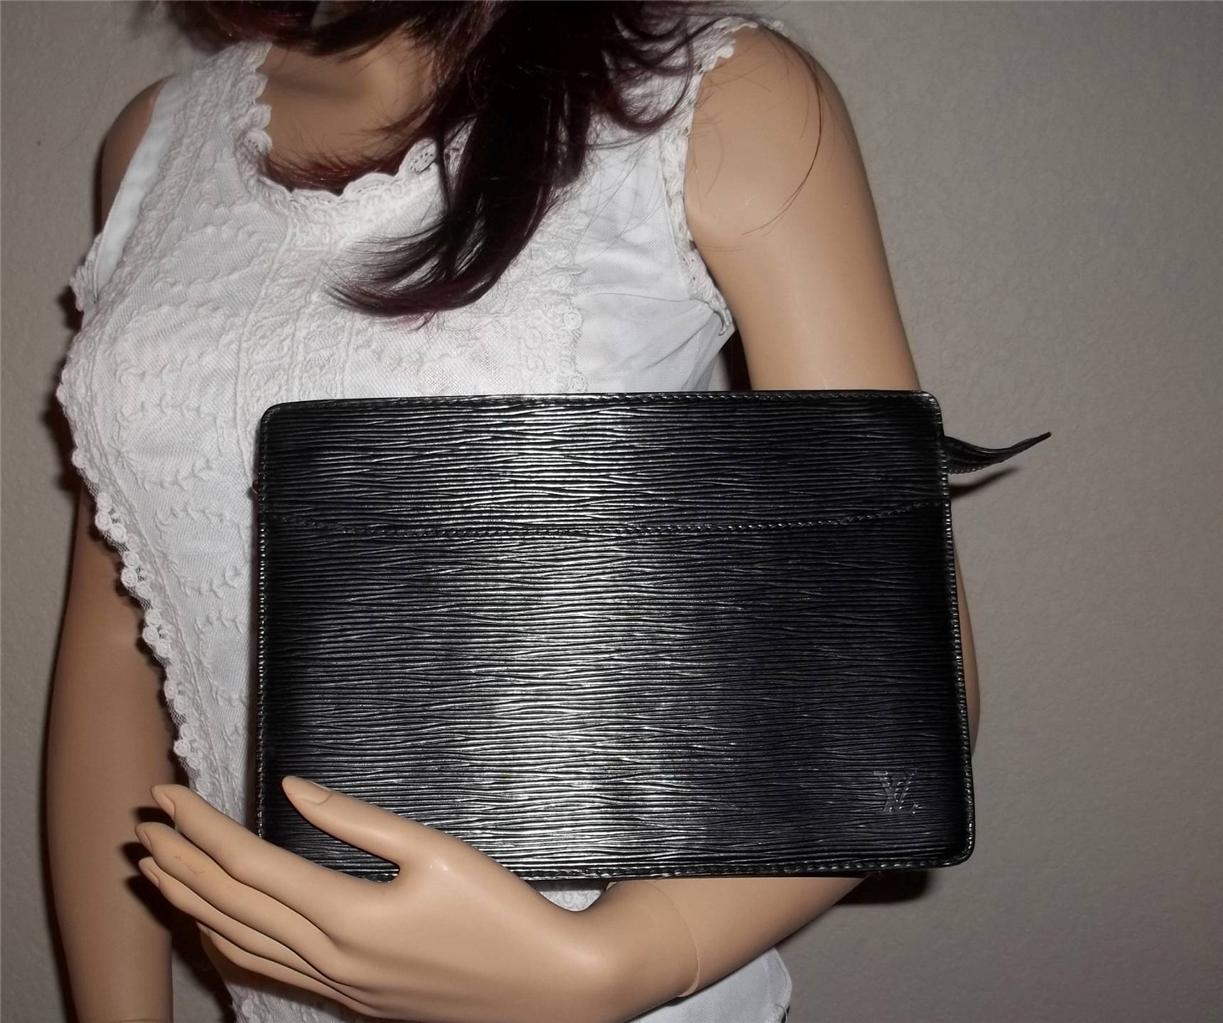 LOUIS VUITTON Shiny Black Epi Leather LARGE POCHETTE CLUTCH HAND BAG *Gorgeous* | eBay